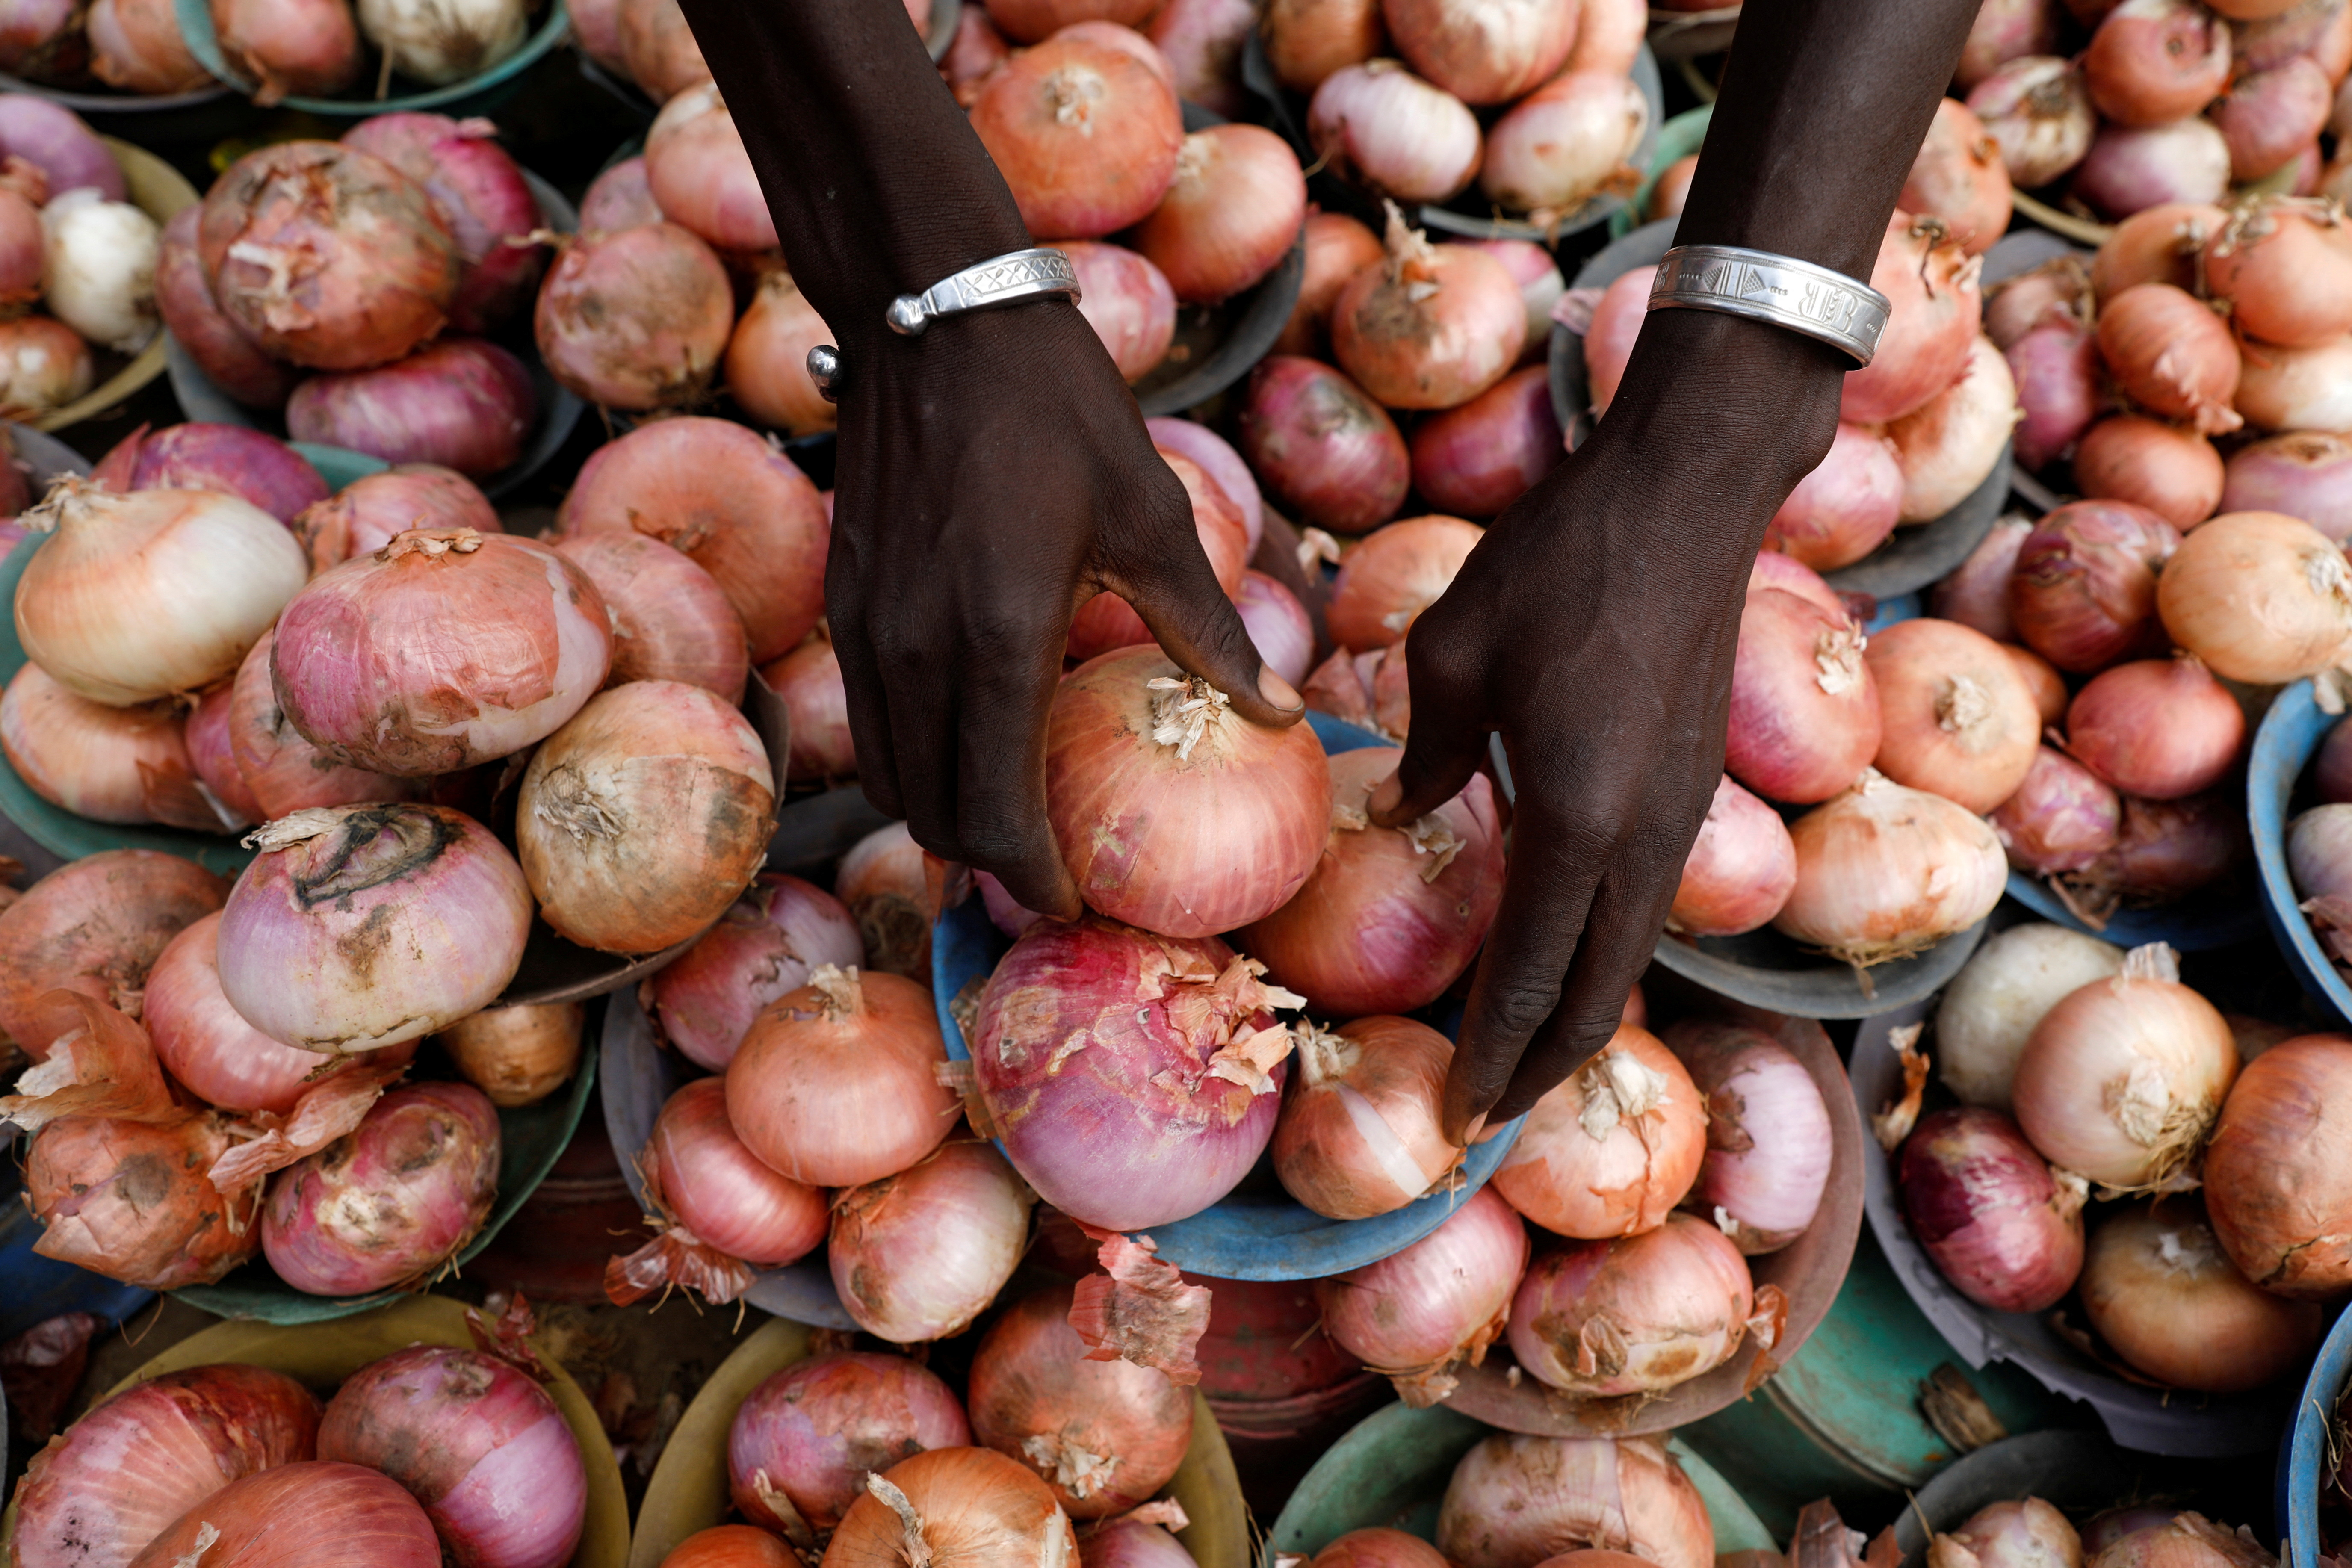 A vendor arranges onions for sale at Mile 12 International Market in Lagos